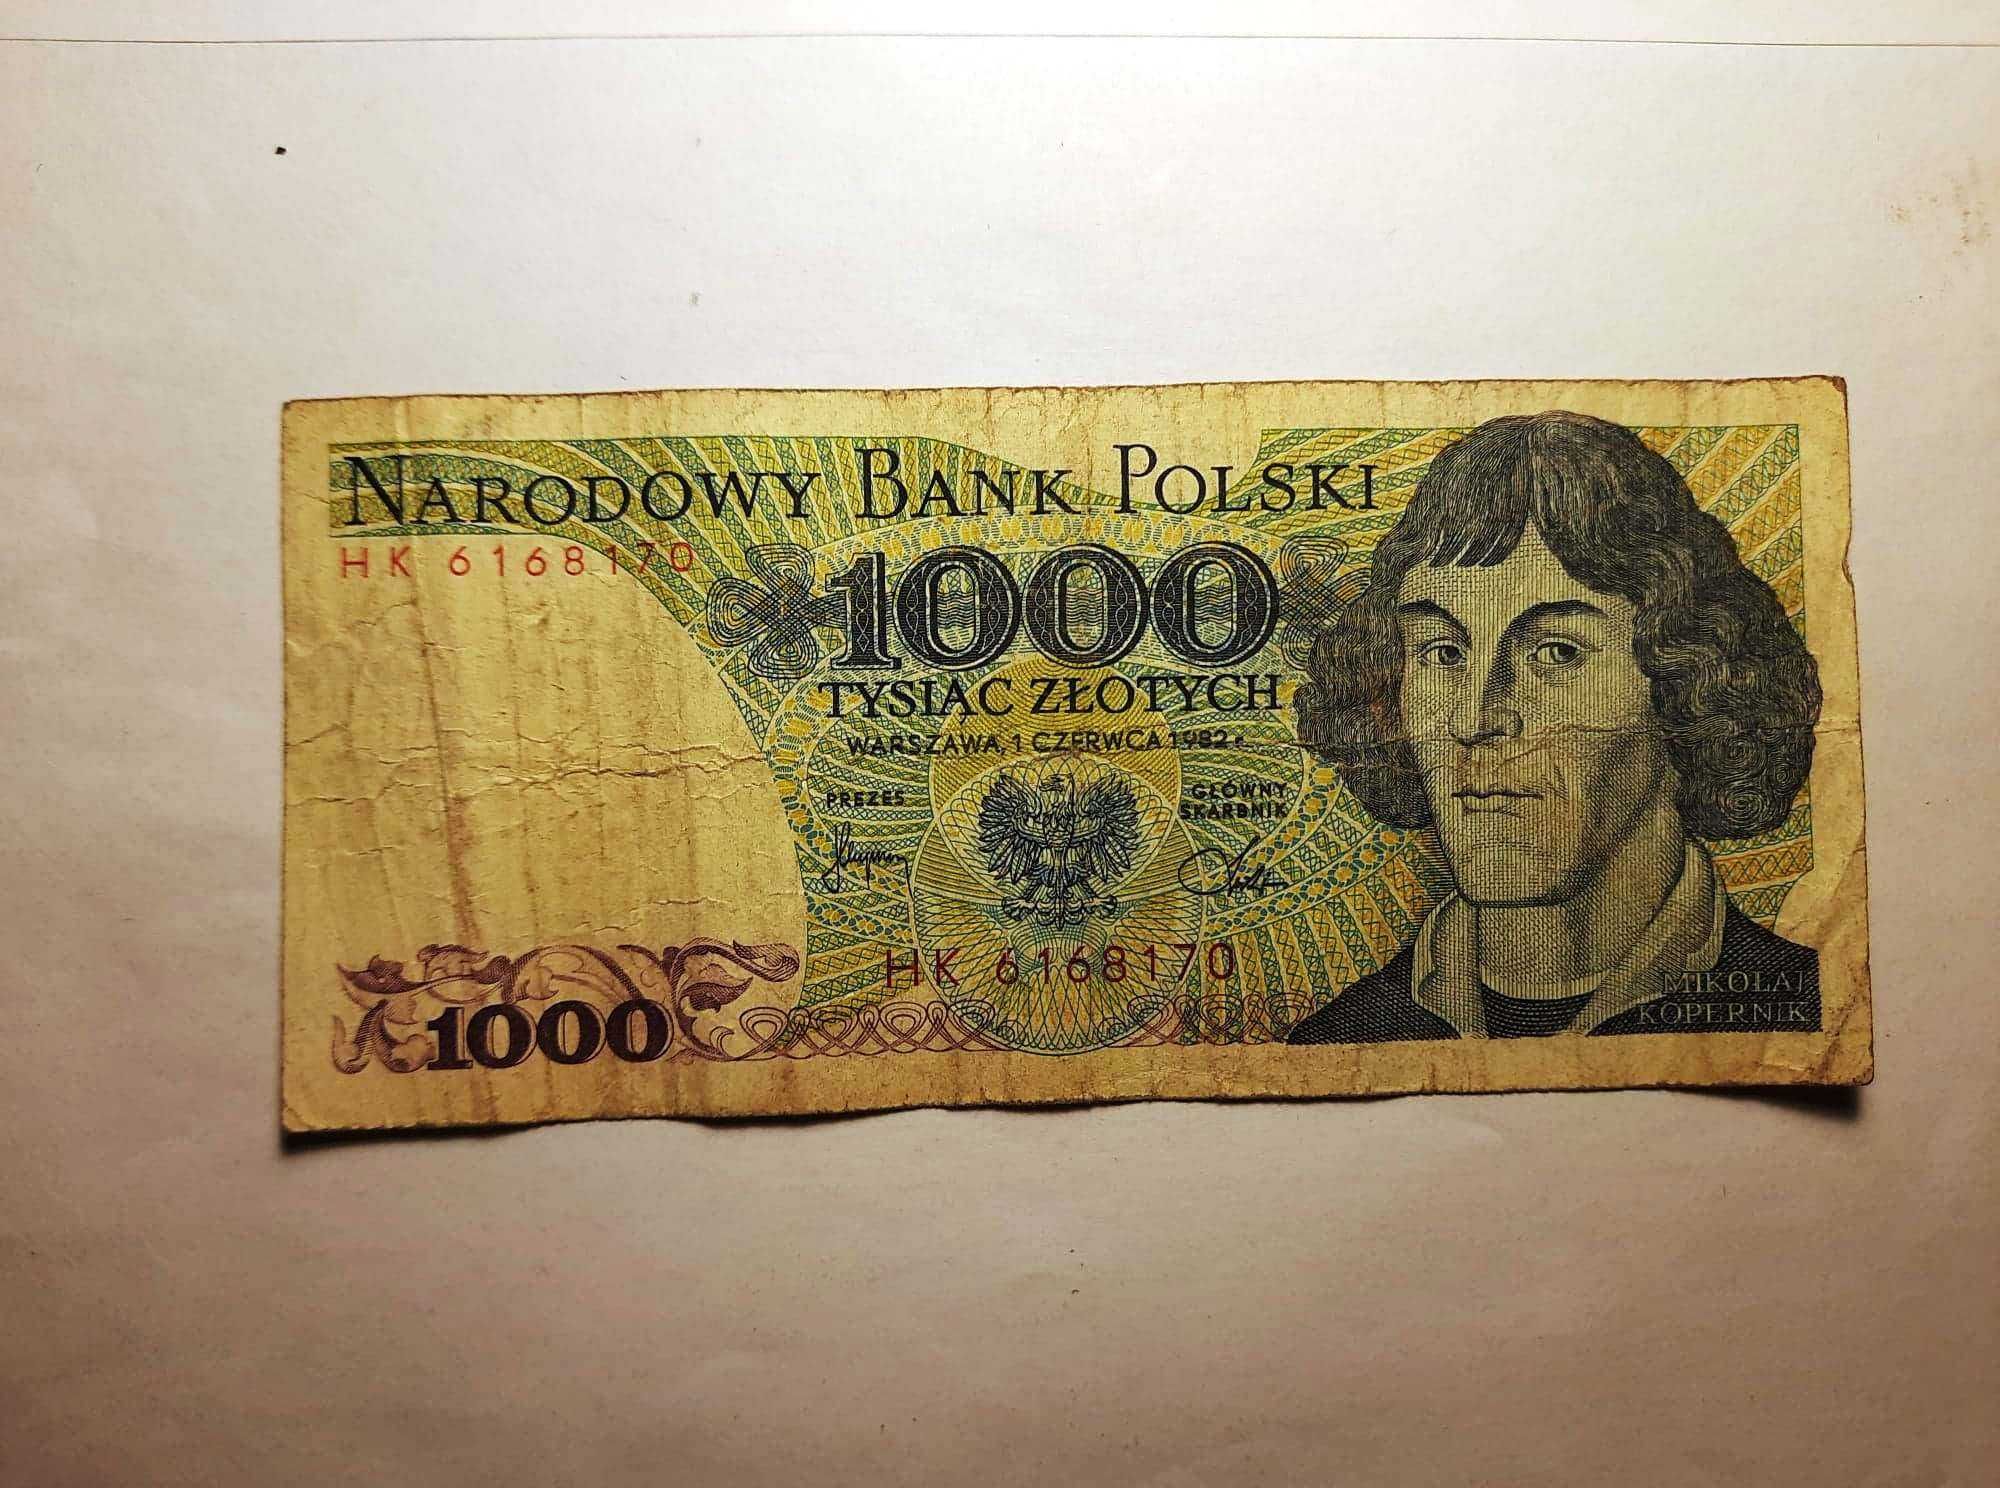 Banknot PRL – 100 zł, 500 zł, 1000 zł, vintage design, PRL, retro